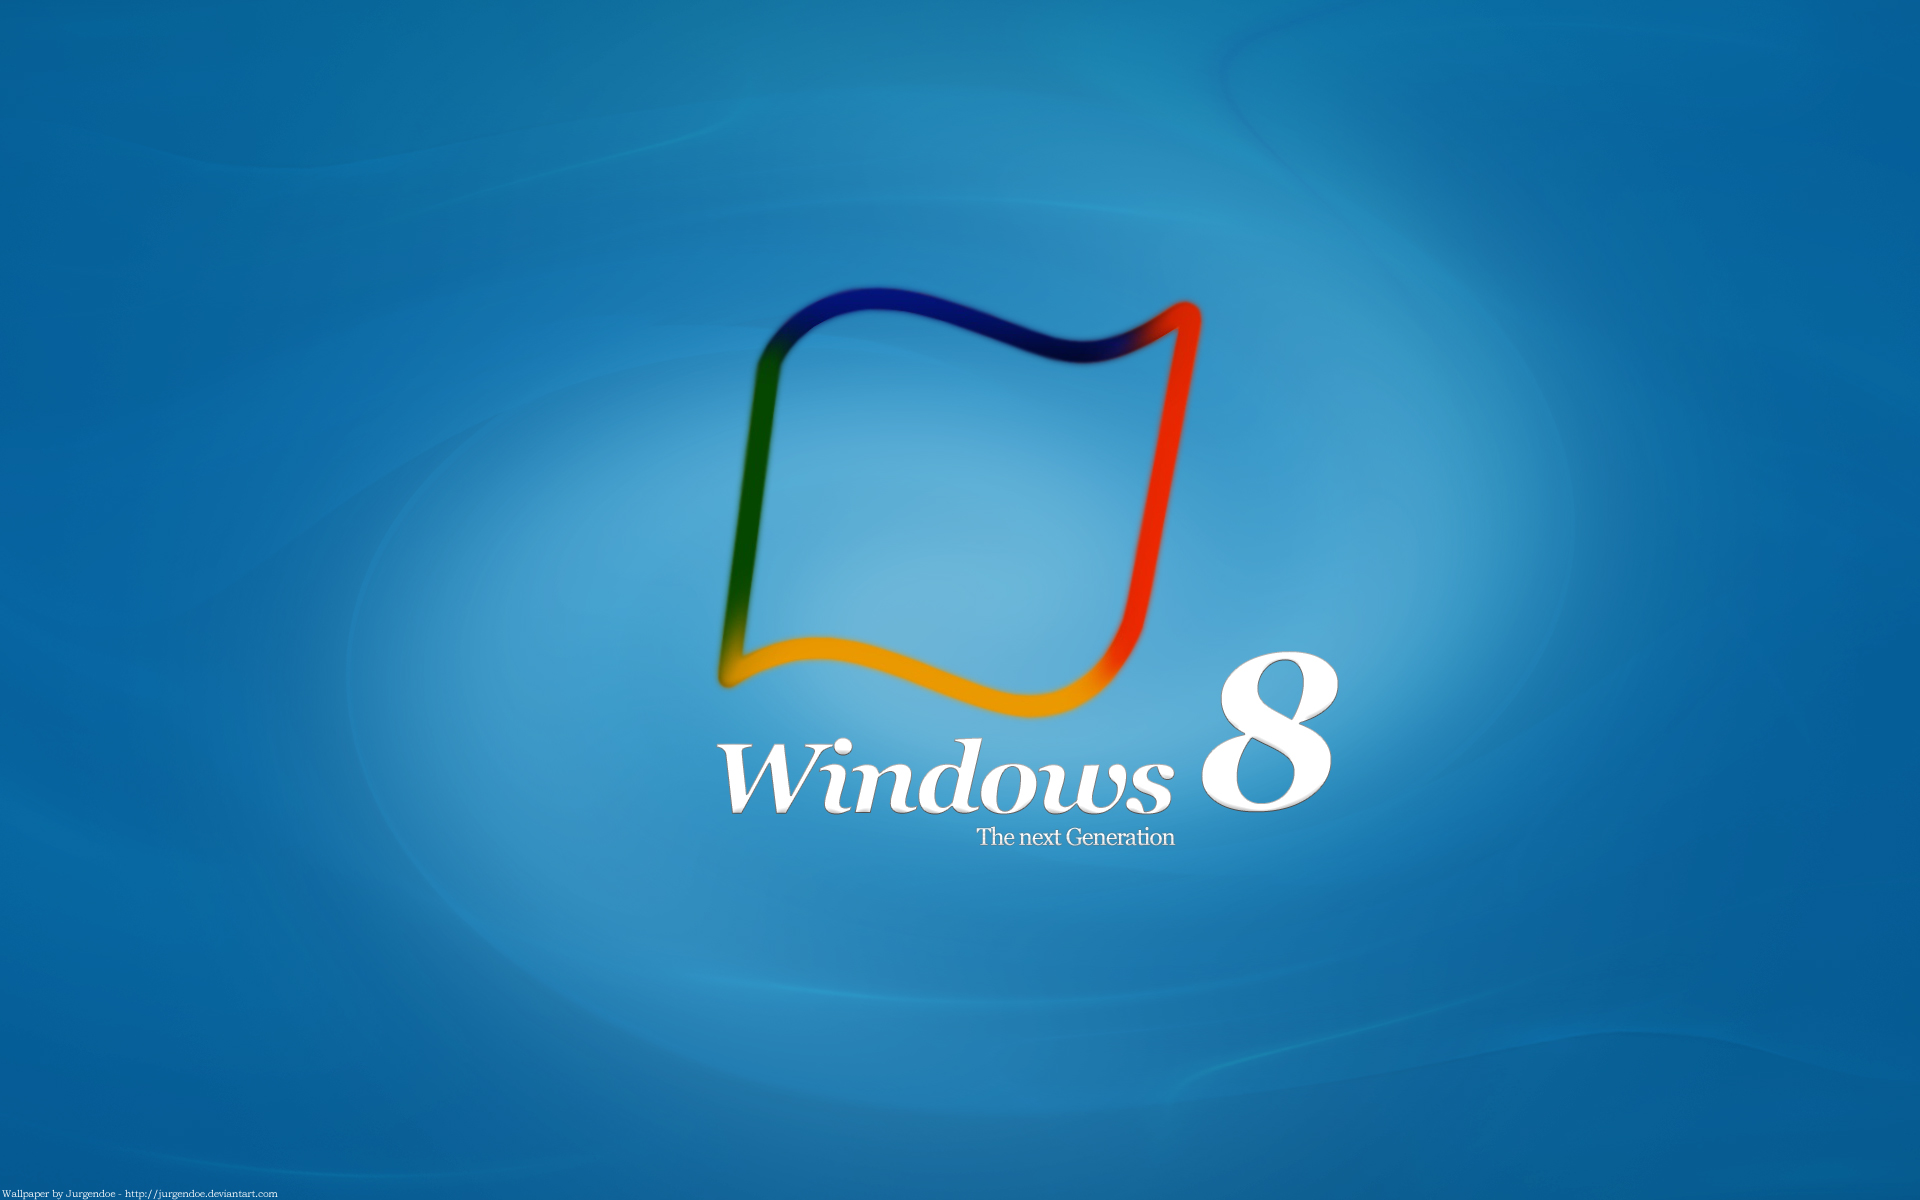 Windows 8 Wallpaper Images QG1 » High Definition Wallpaper